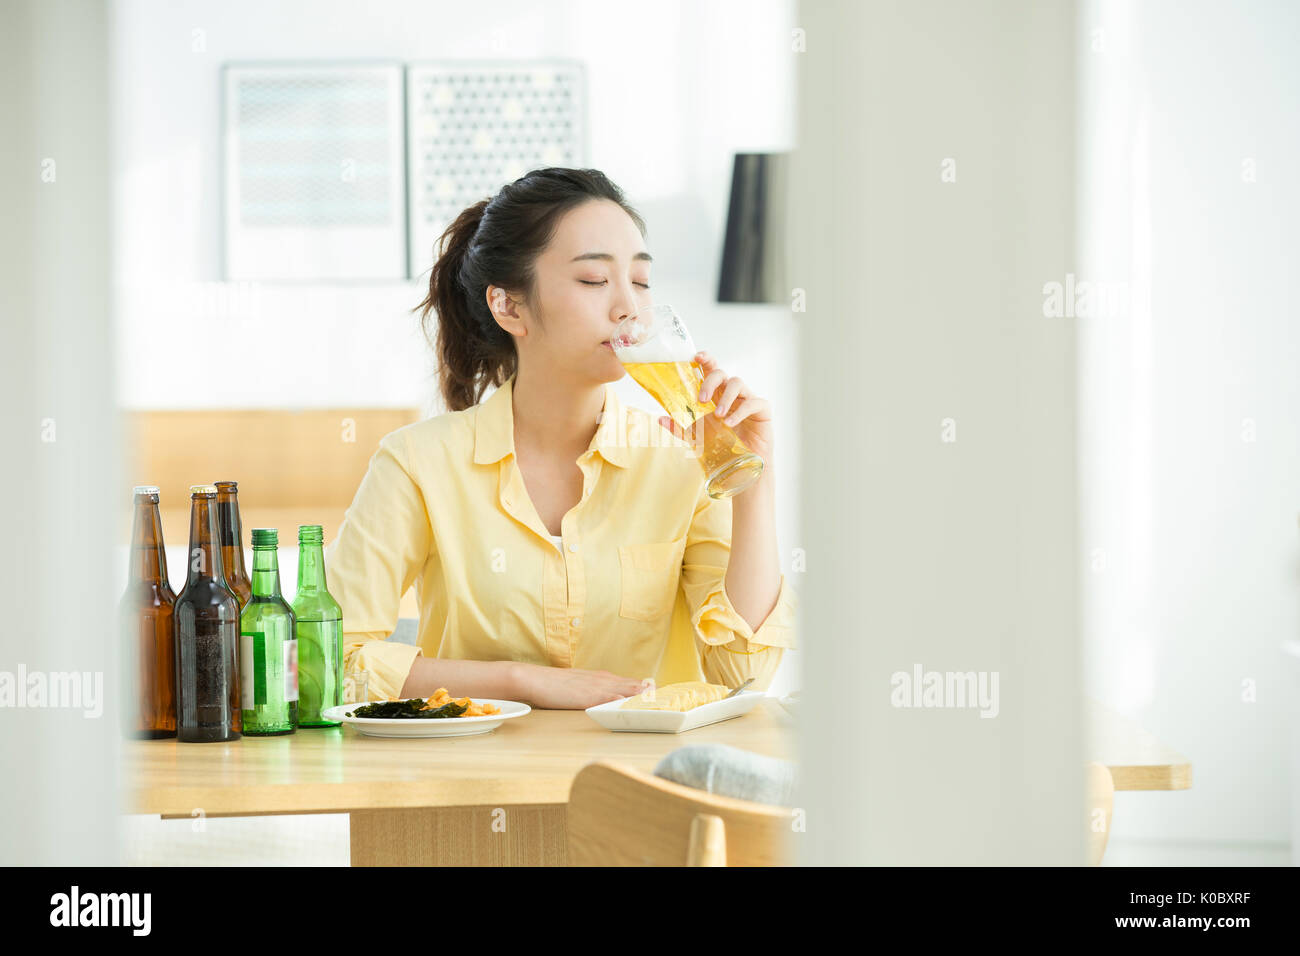 Portrait of single woman drinking alone Stock Photo